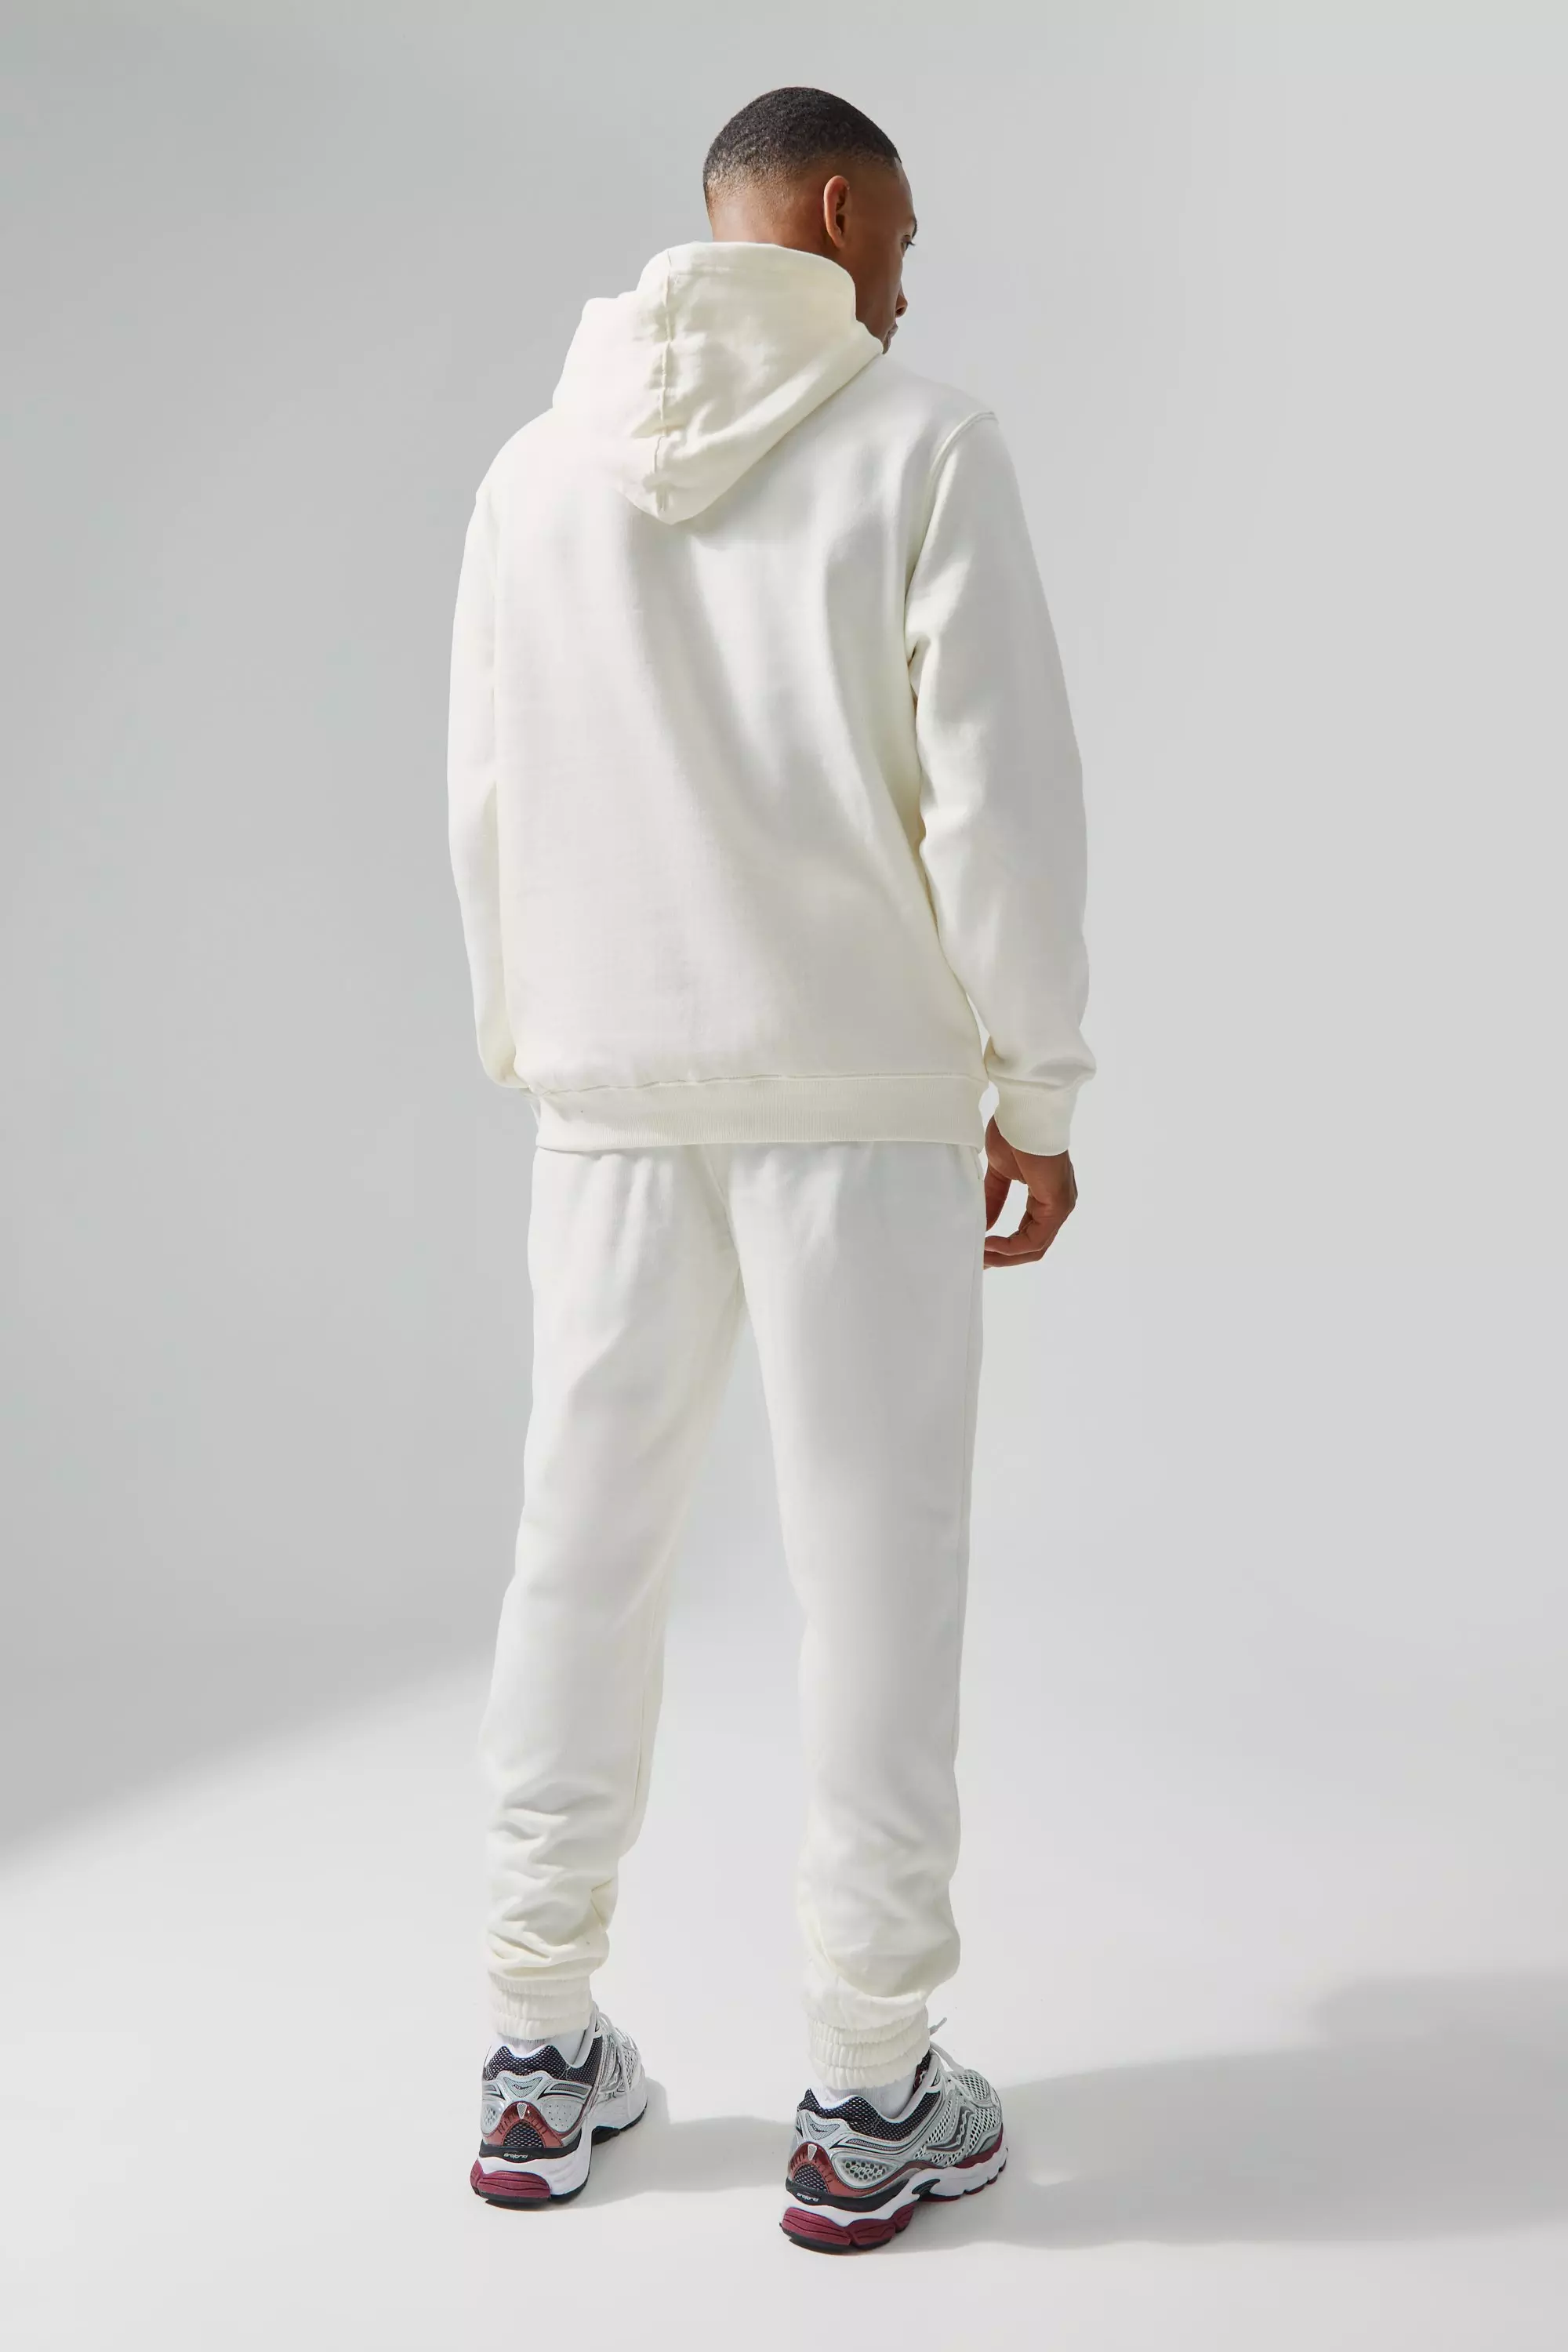 CHANDAL HOMBRE (algodon) JUST color blanco – CRISTYGYM